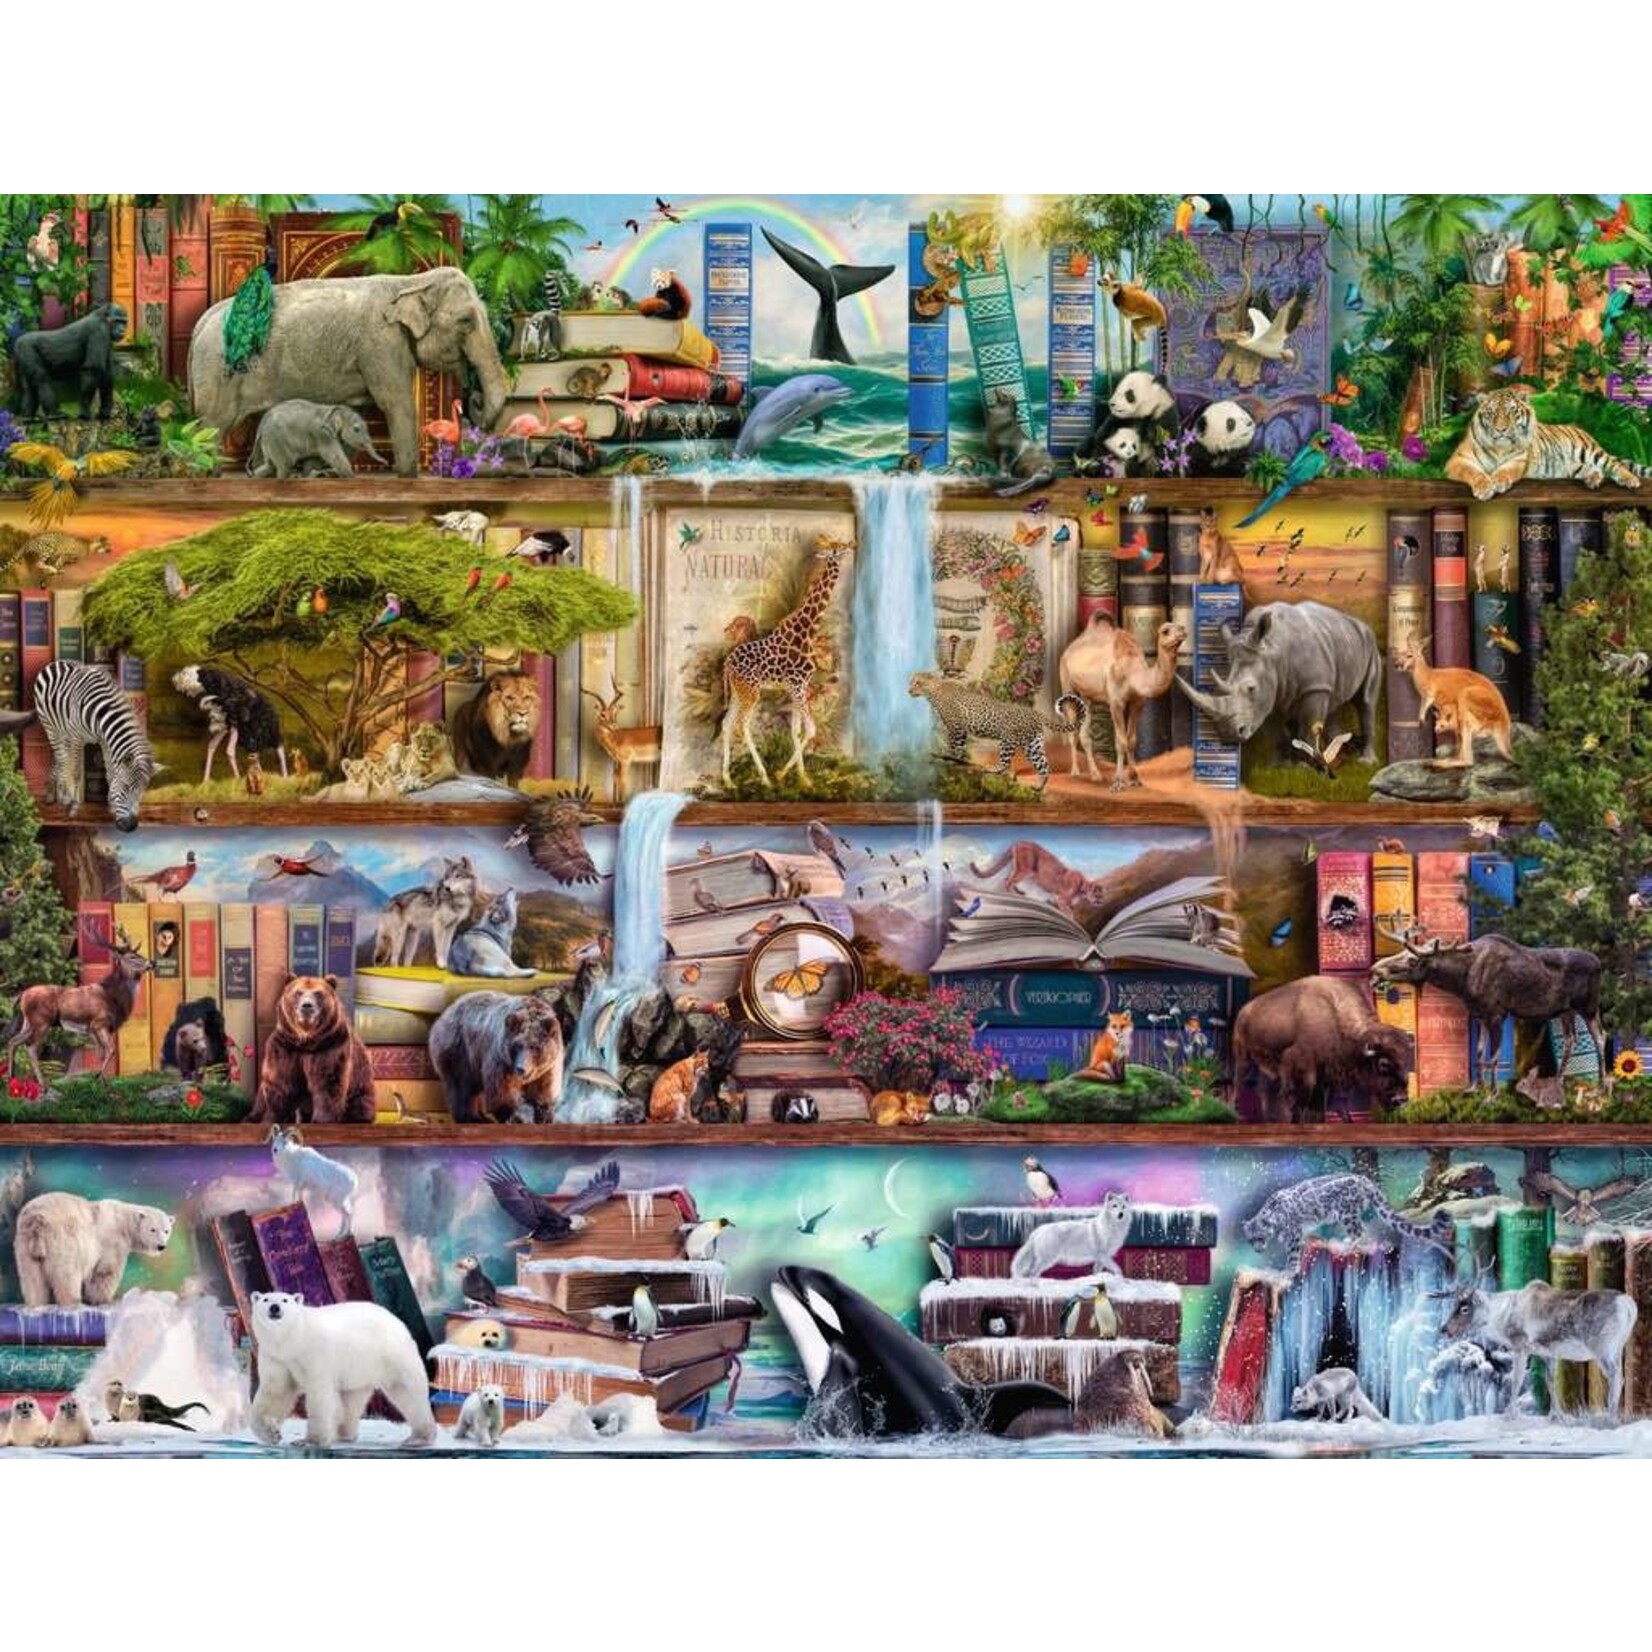 Wild Kingdom Shelves 2000 Piece Puzzle